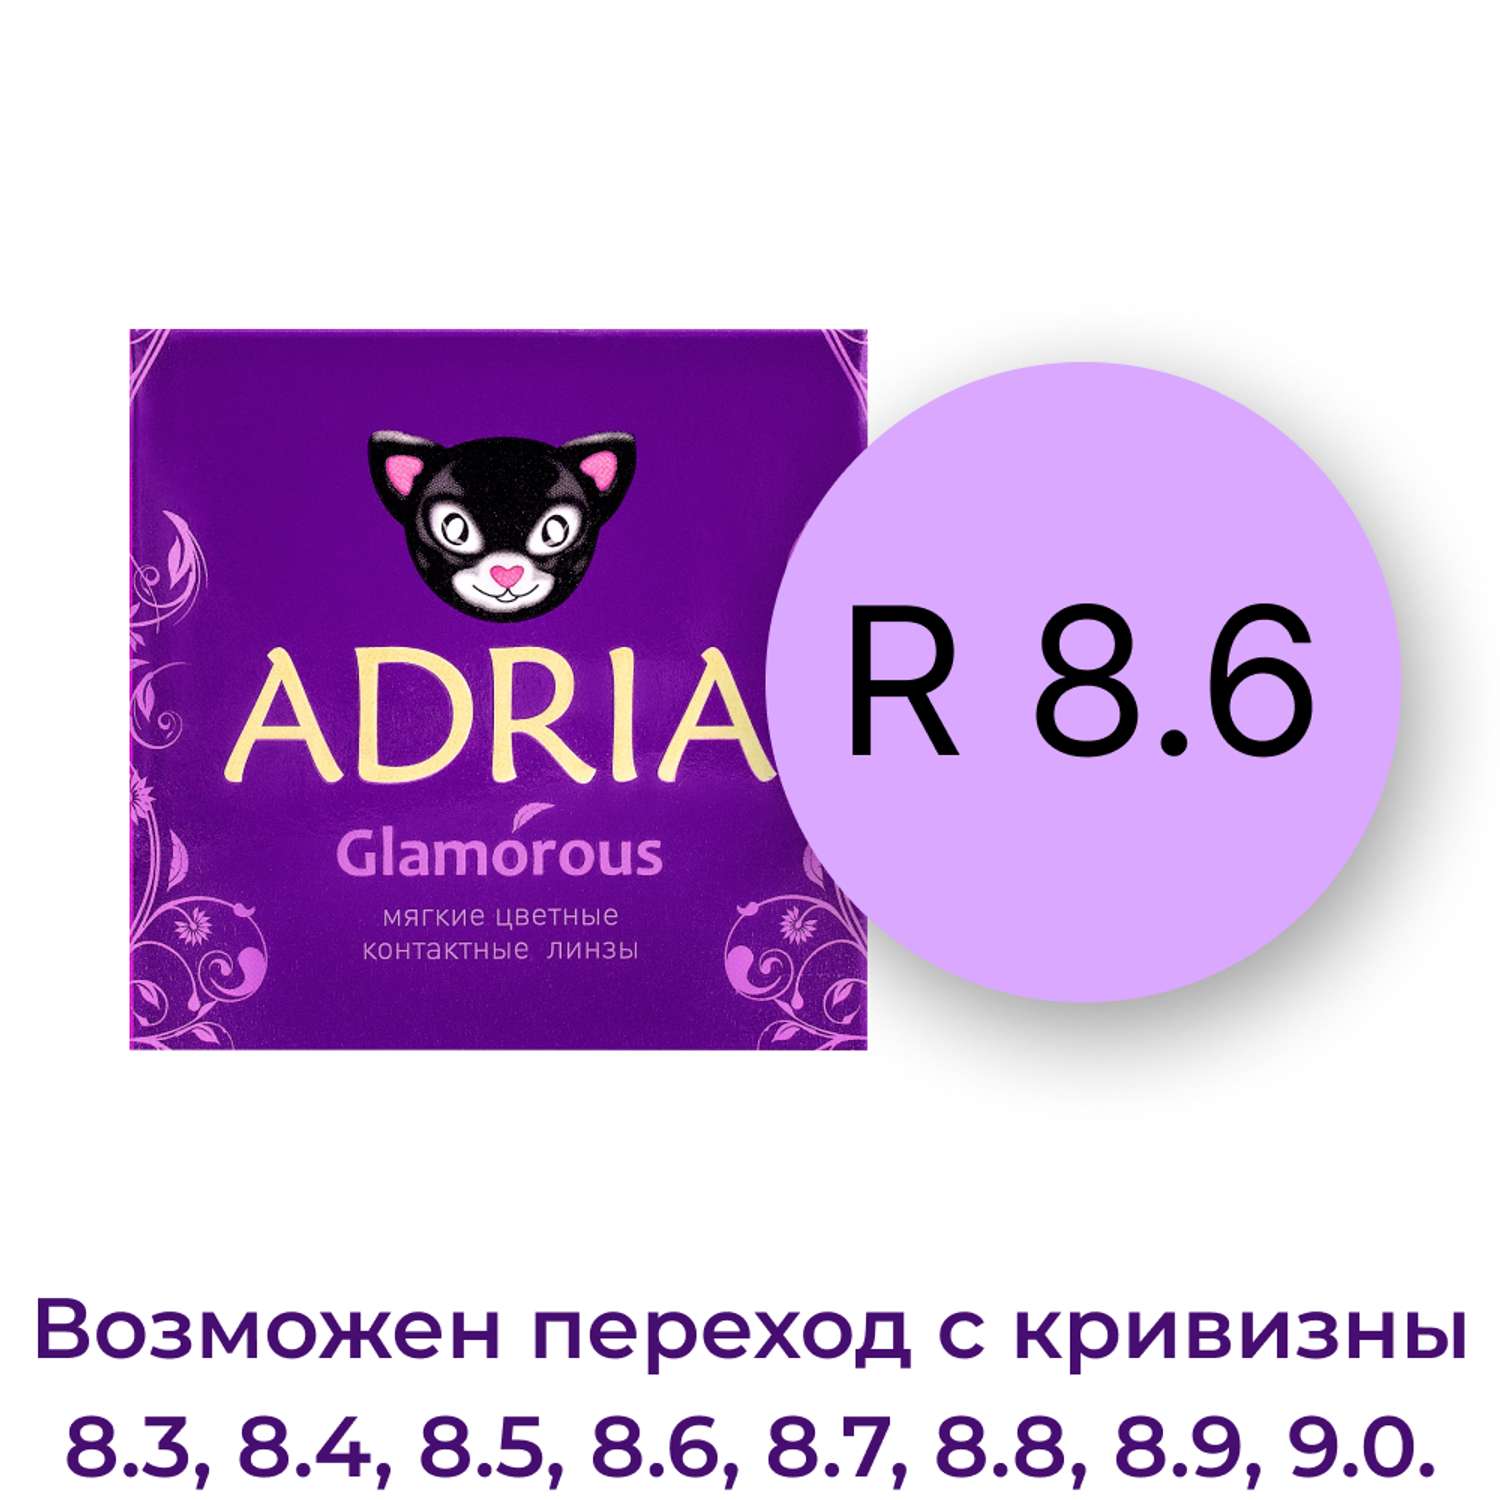 Цветные контактные линзы ADRIA Glamorous 2 линзы R 8.6 Turquoise -0.00 - фото 4